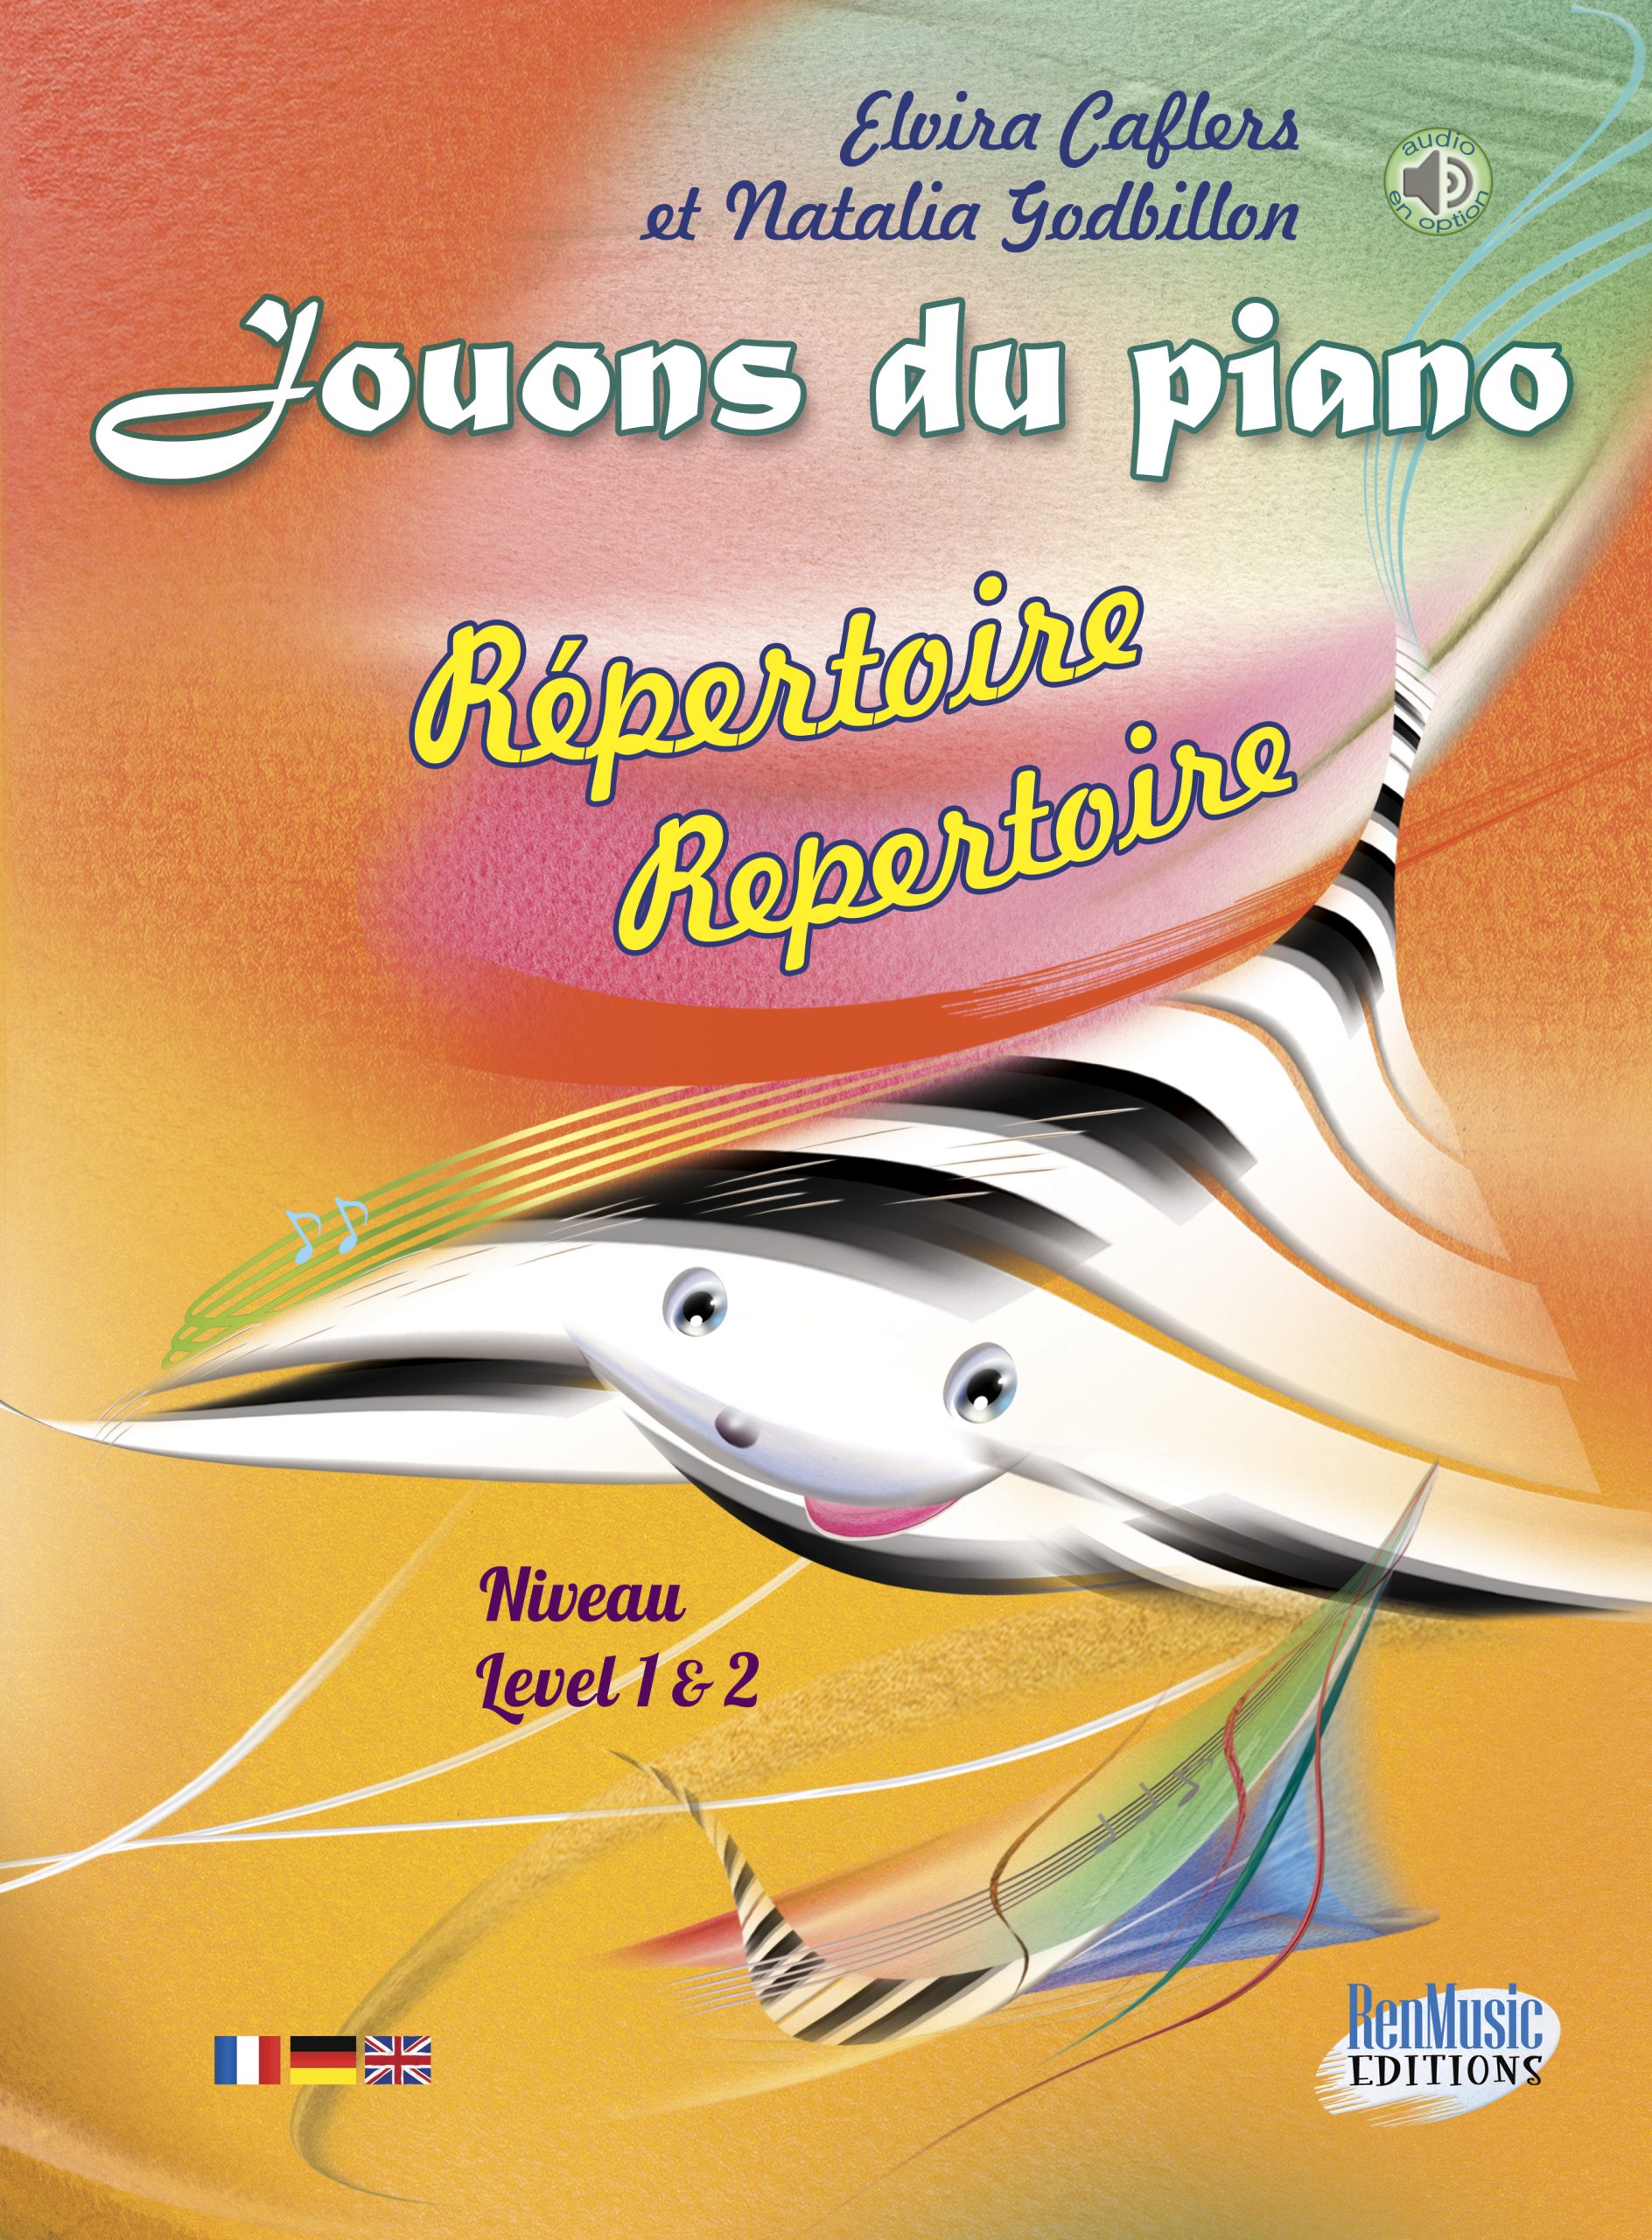 Jouons du piano Répertoire (CAFLERS ELVIRA / GODBILLON NATALIA)